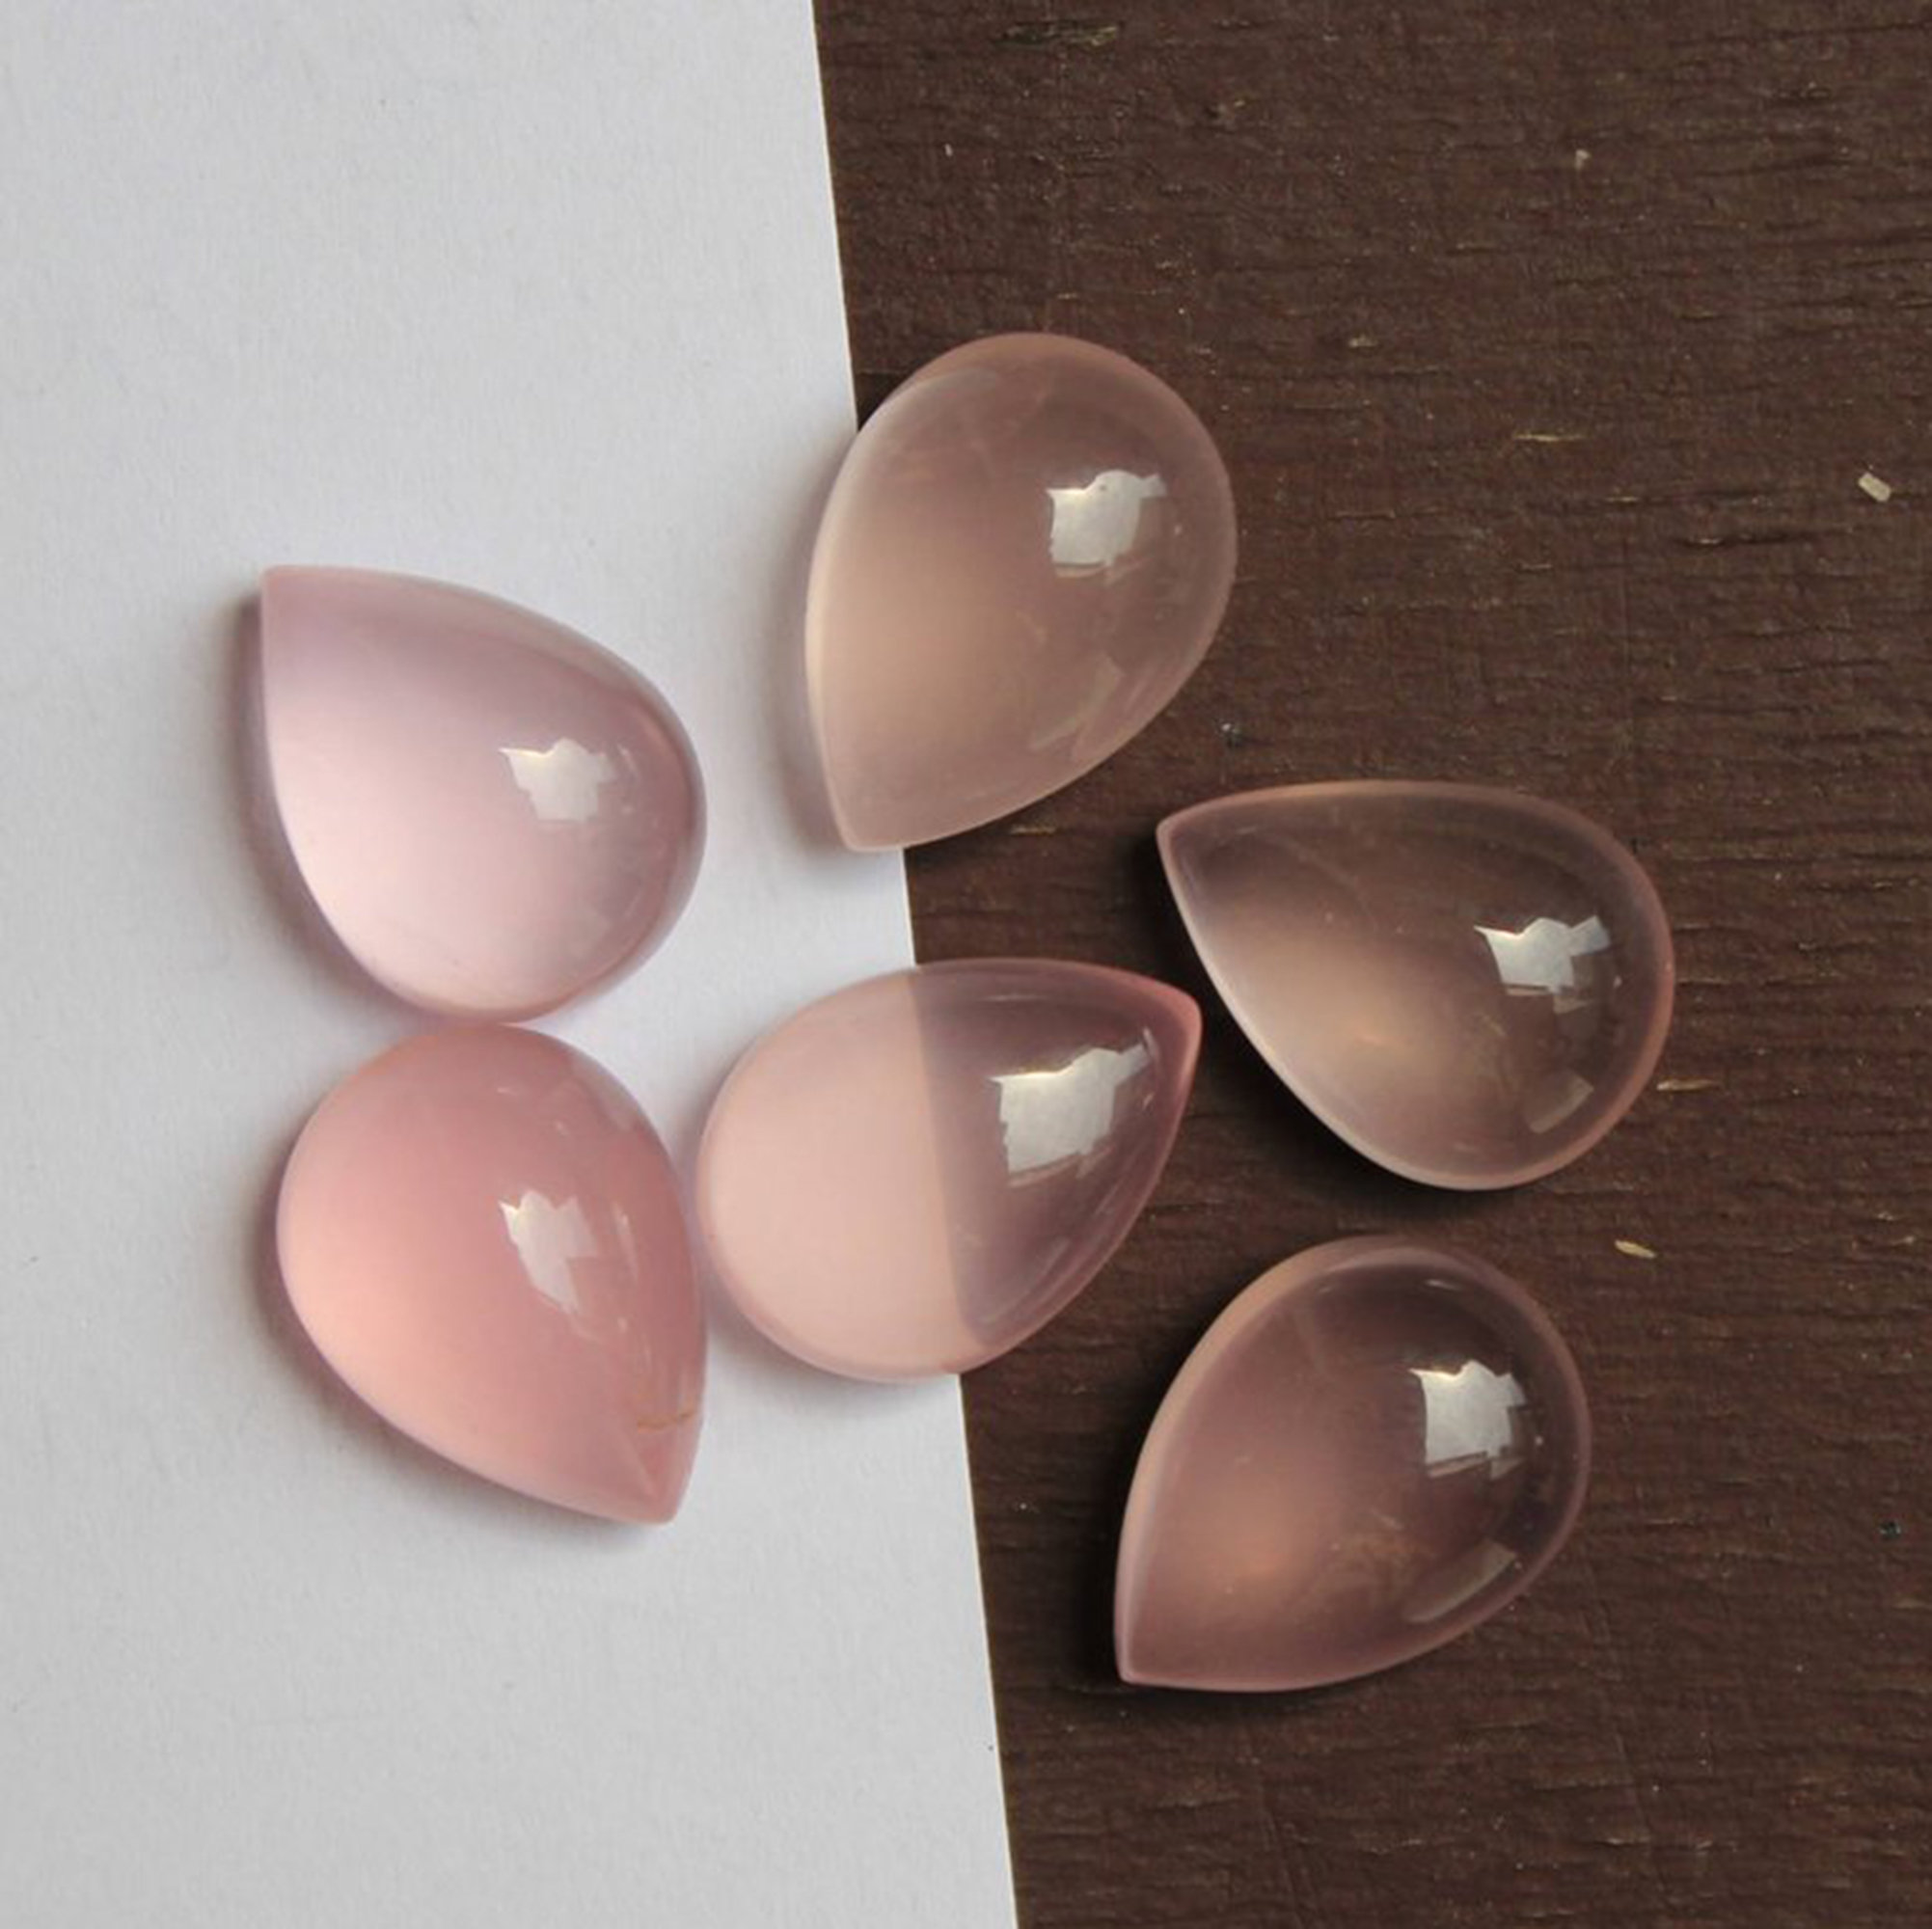 100%Natural Dendrite Opal  Pear Shape Cabochon Calibrated Size Loose Gemstones 5x7,6x8,7x9,8x10,10x12,10x14,13x18,15x20,16x22,18x25,20x30 mm